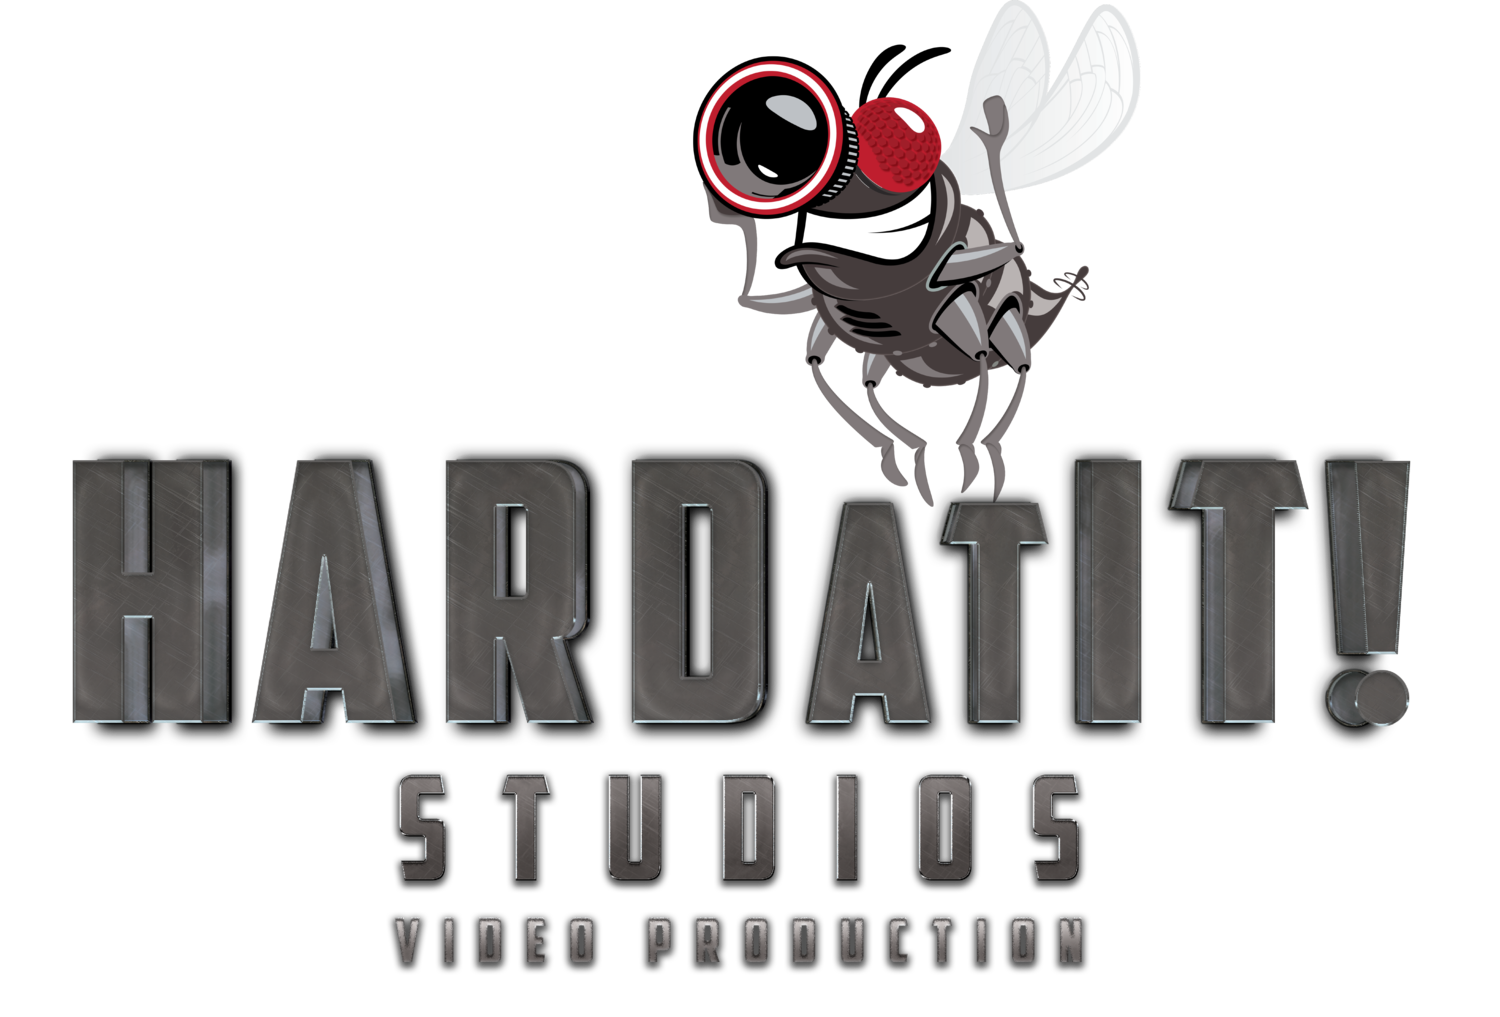 Hardatit! Studios